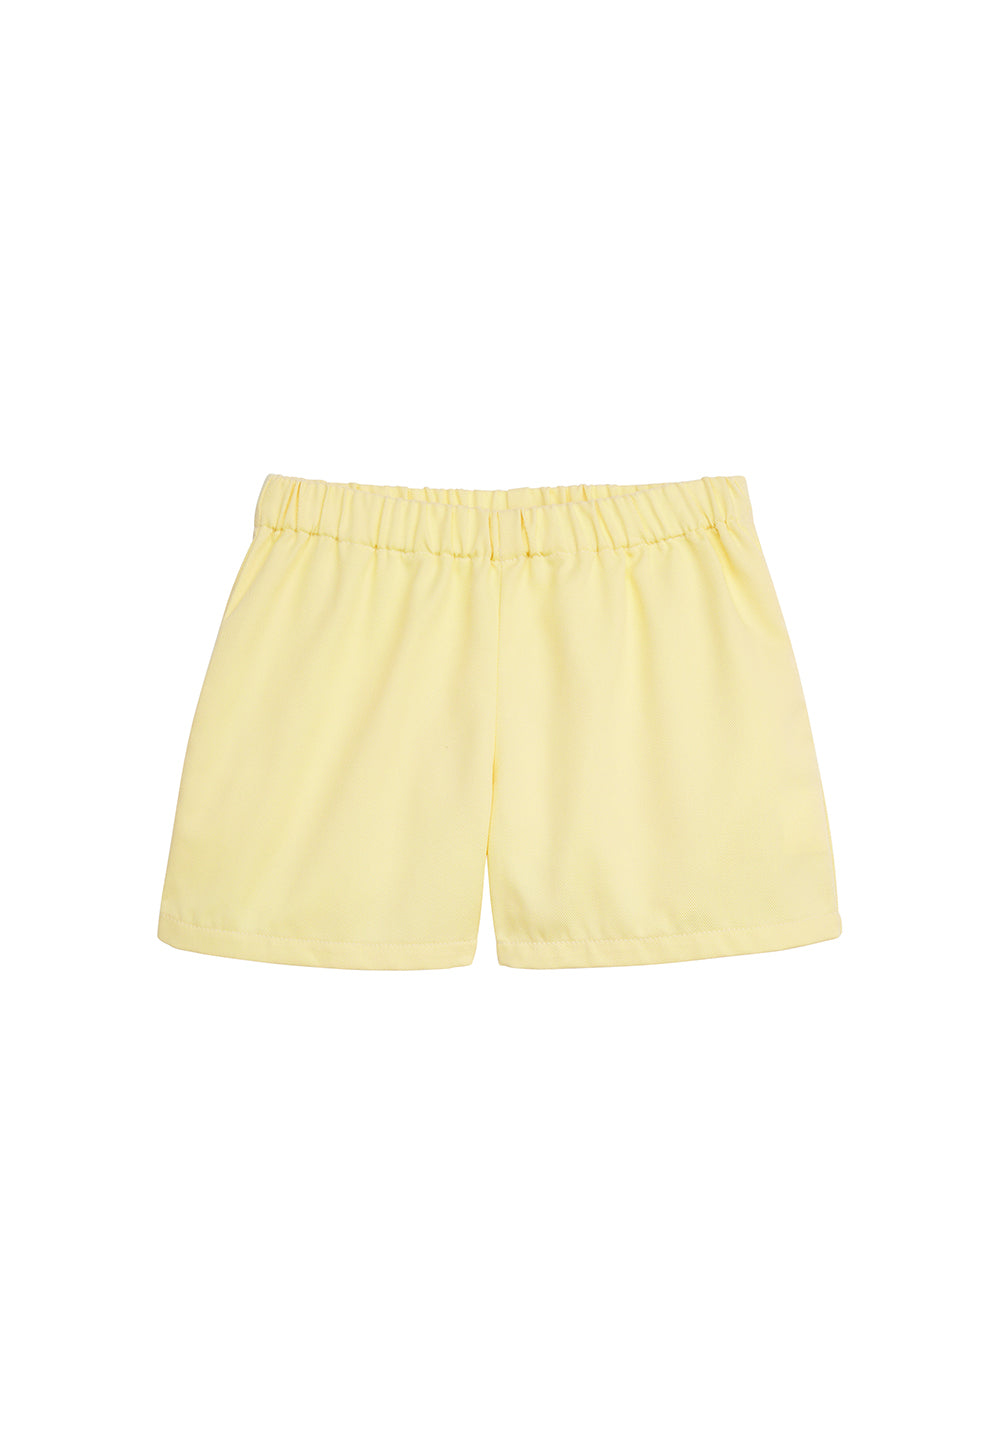 Basic Shorts in Yellow Twill